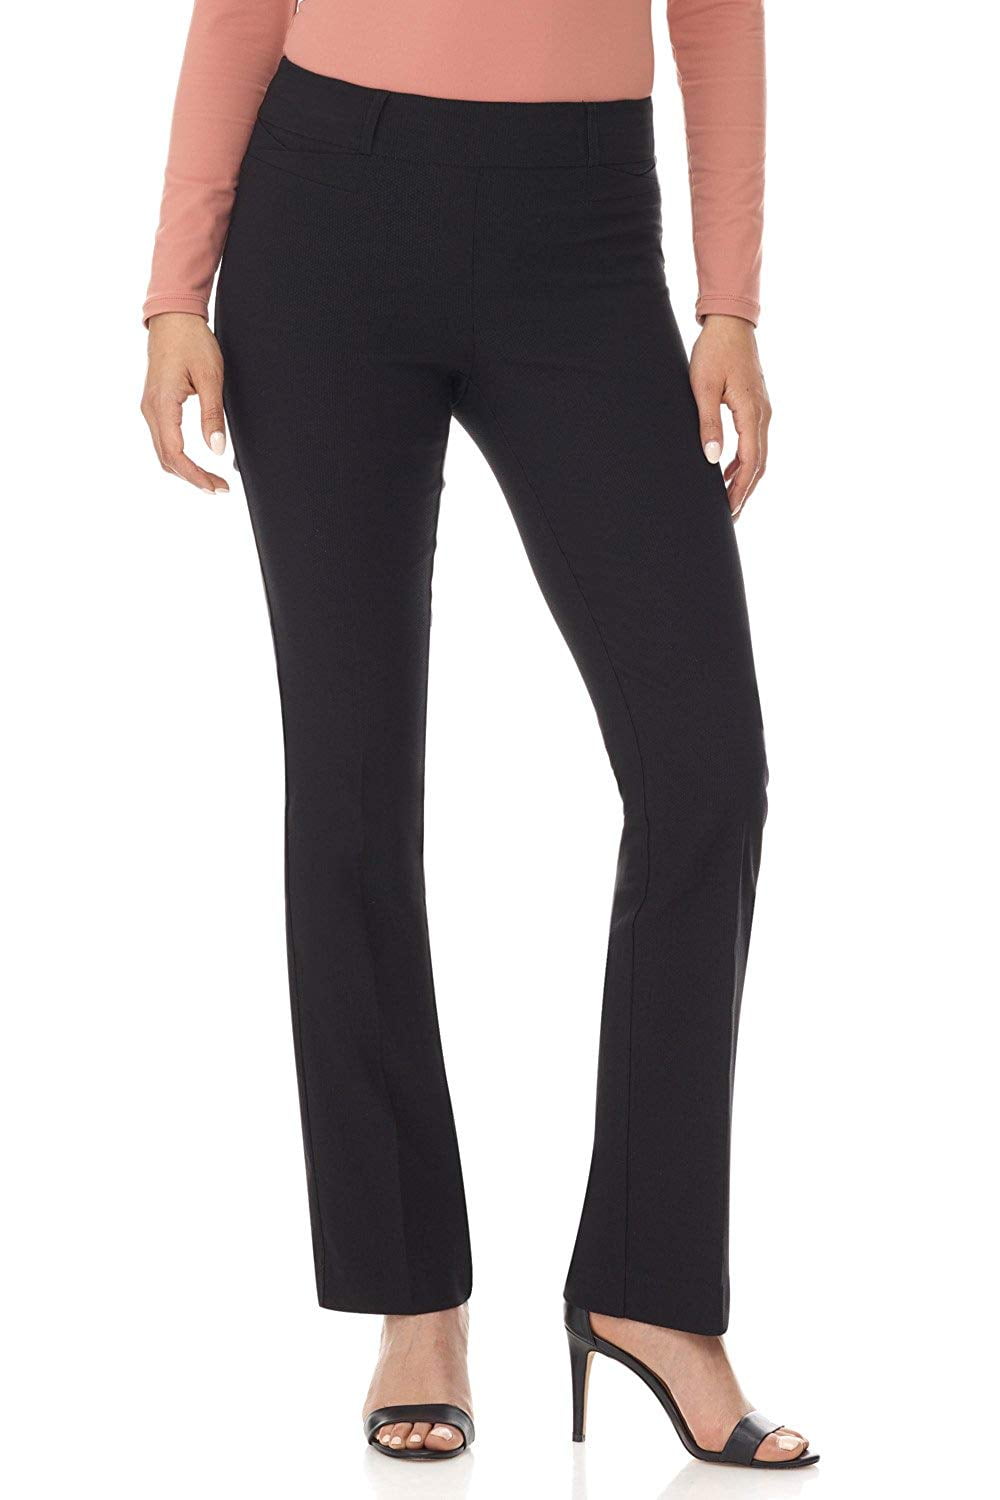 Rekucci - Womens Petite Stretch Barely Bootcut Pants 2P - Walmart.com ...